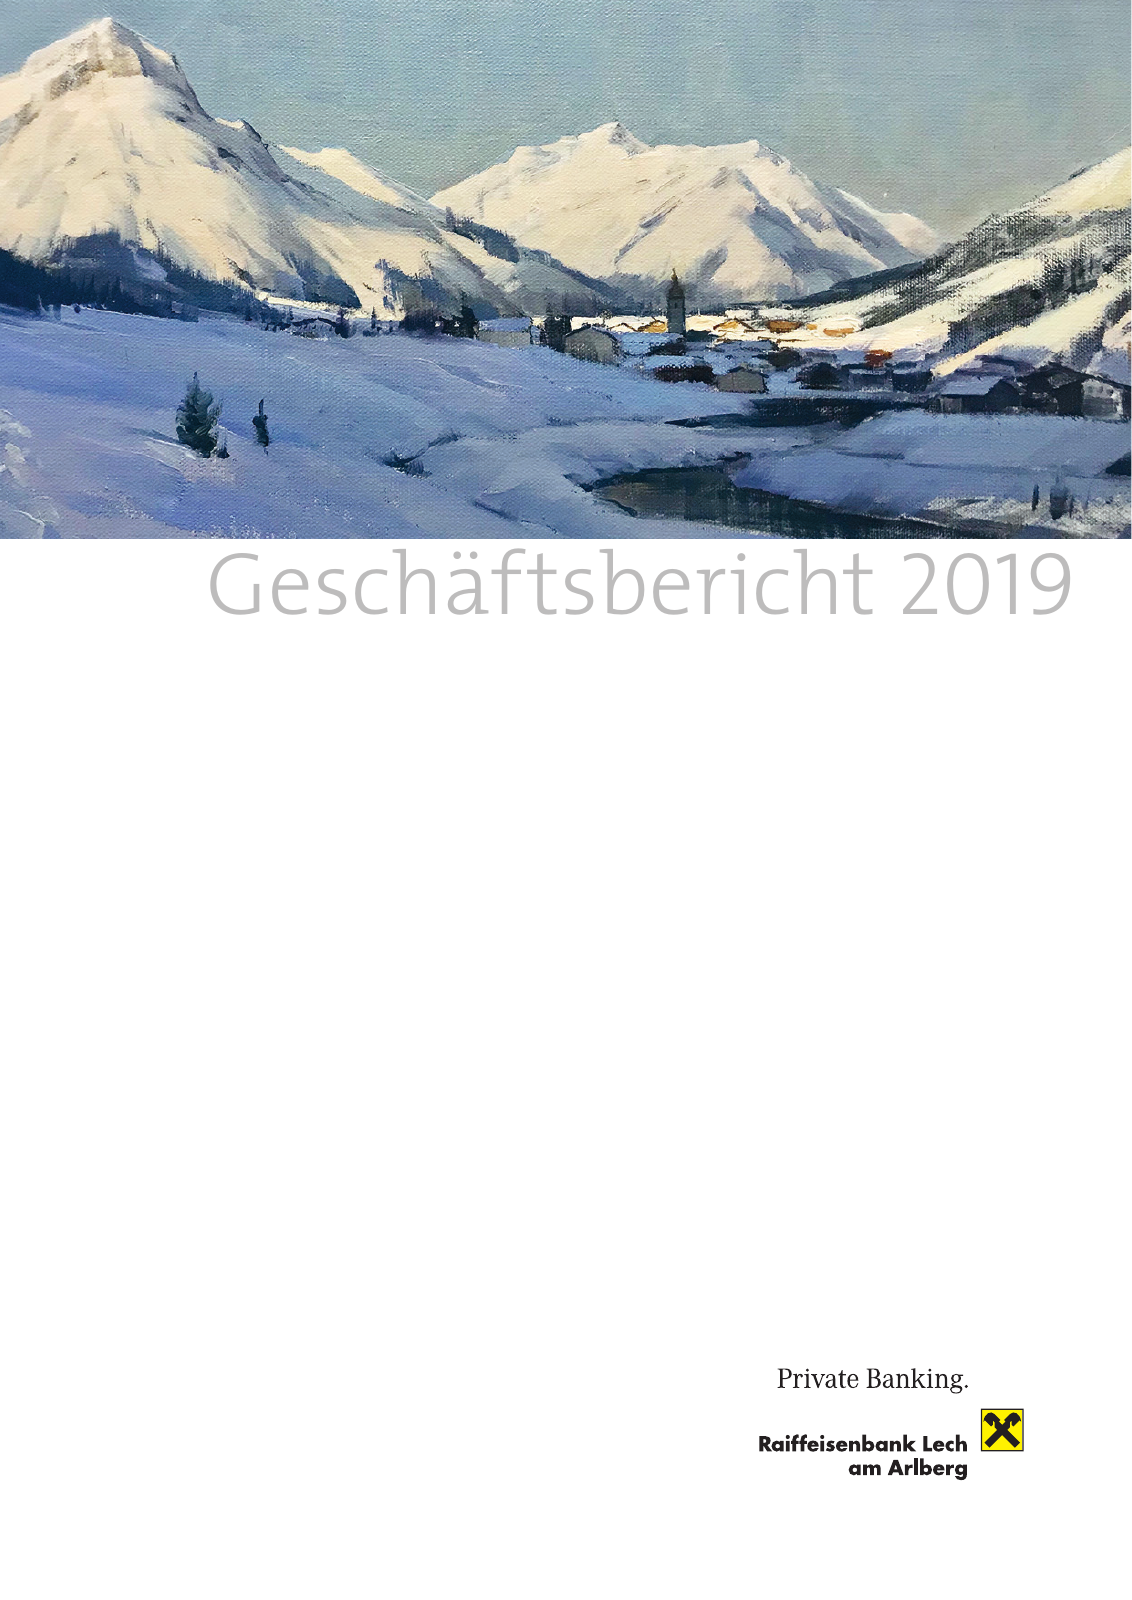 Vorschau Geschäftsbericht RB Lech 2019 Seite 1